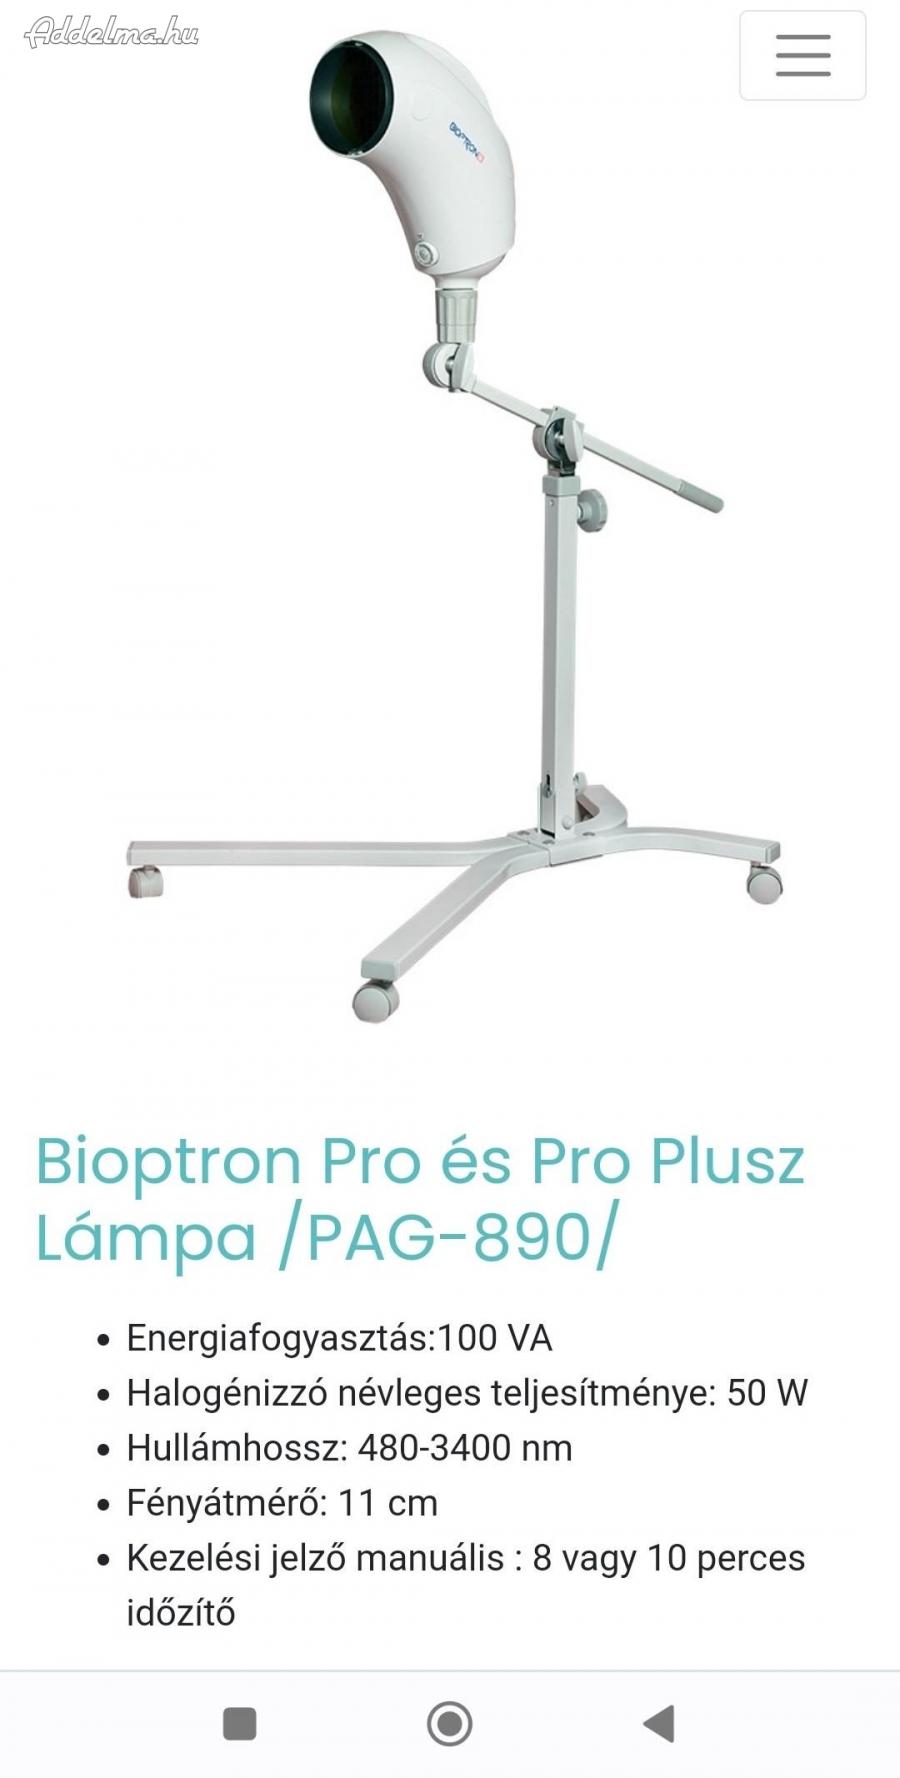 Bioptron Pro lámpa